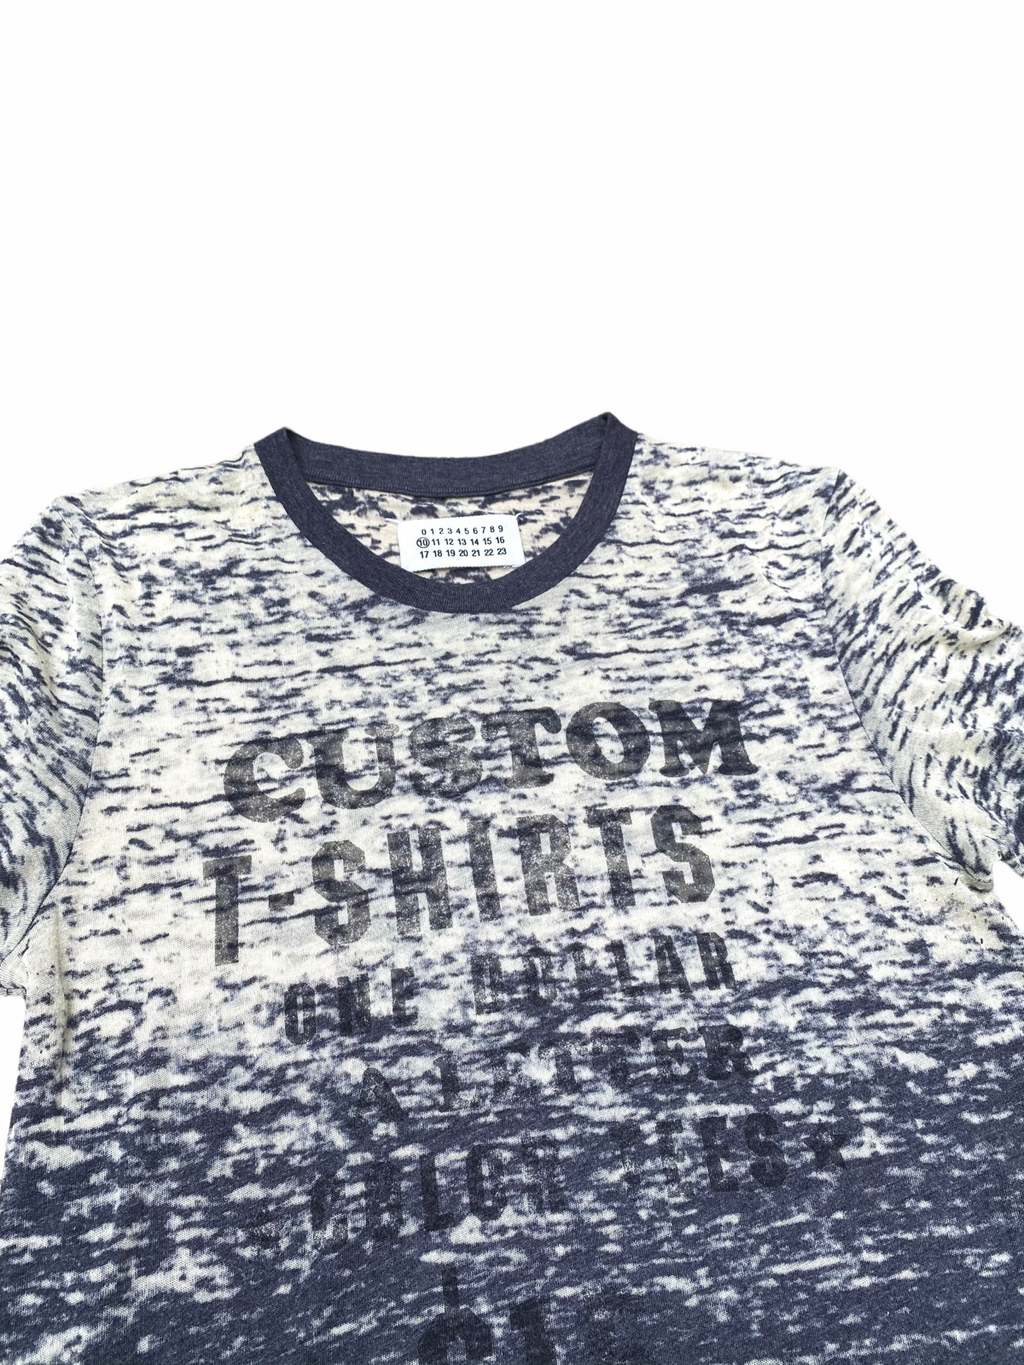 SS 2009 Custom T-shirt Size 48